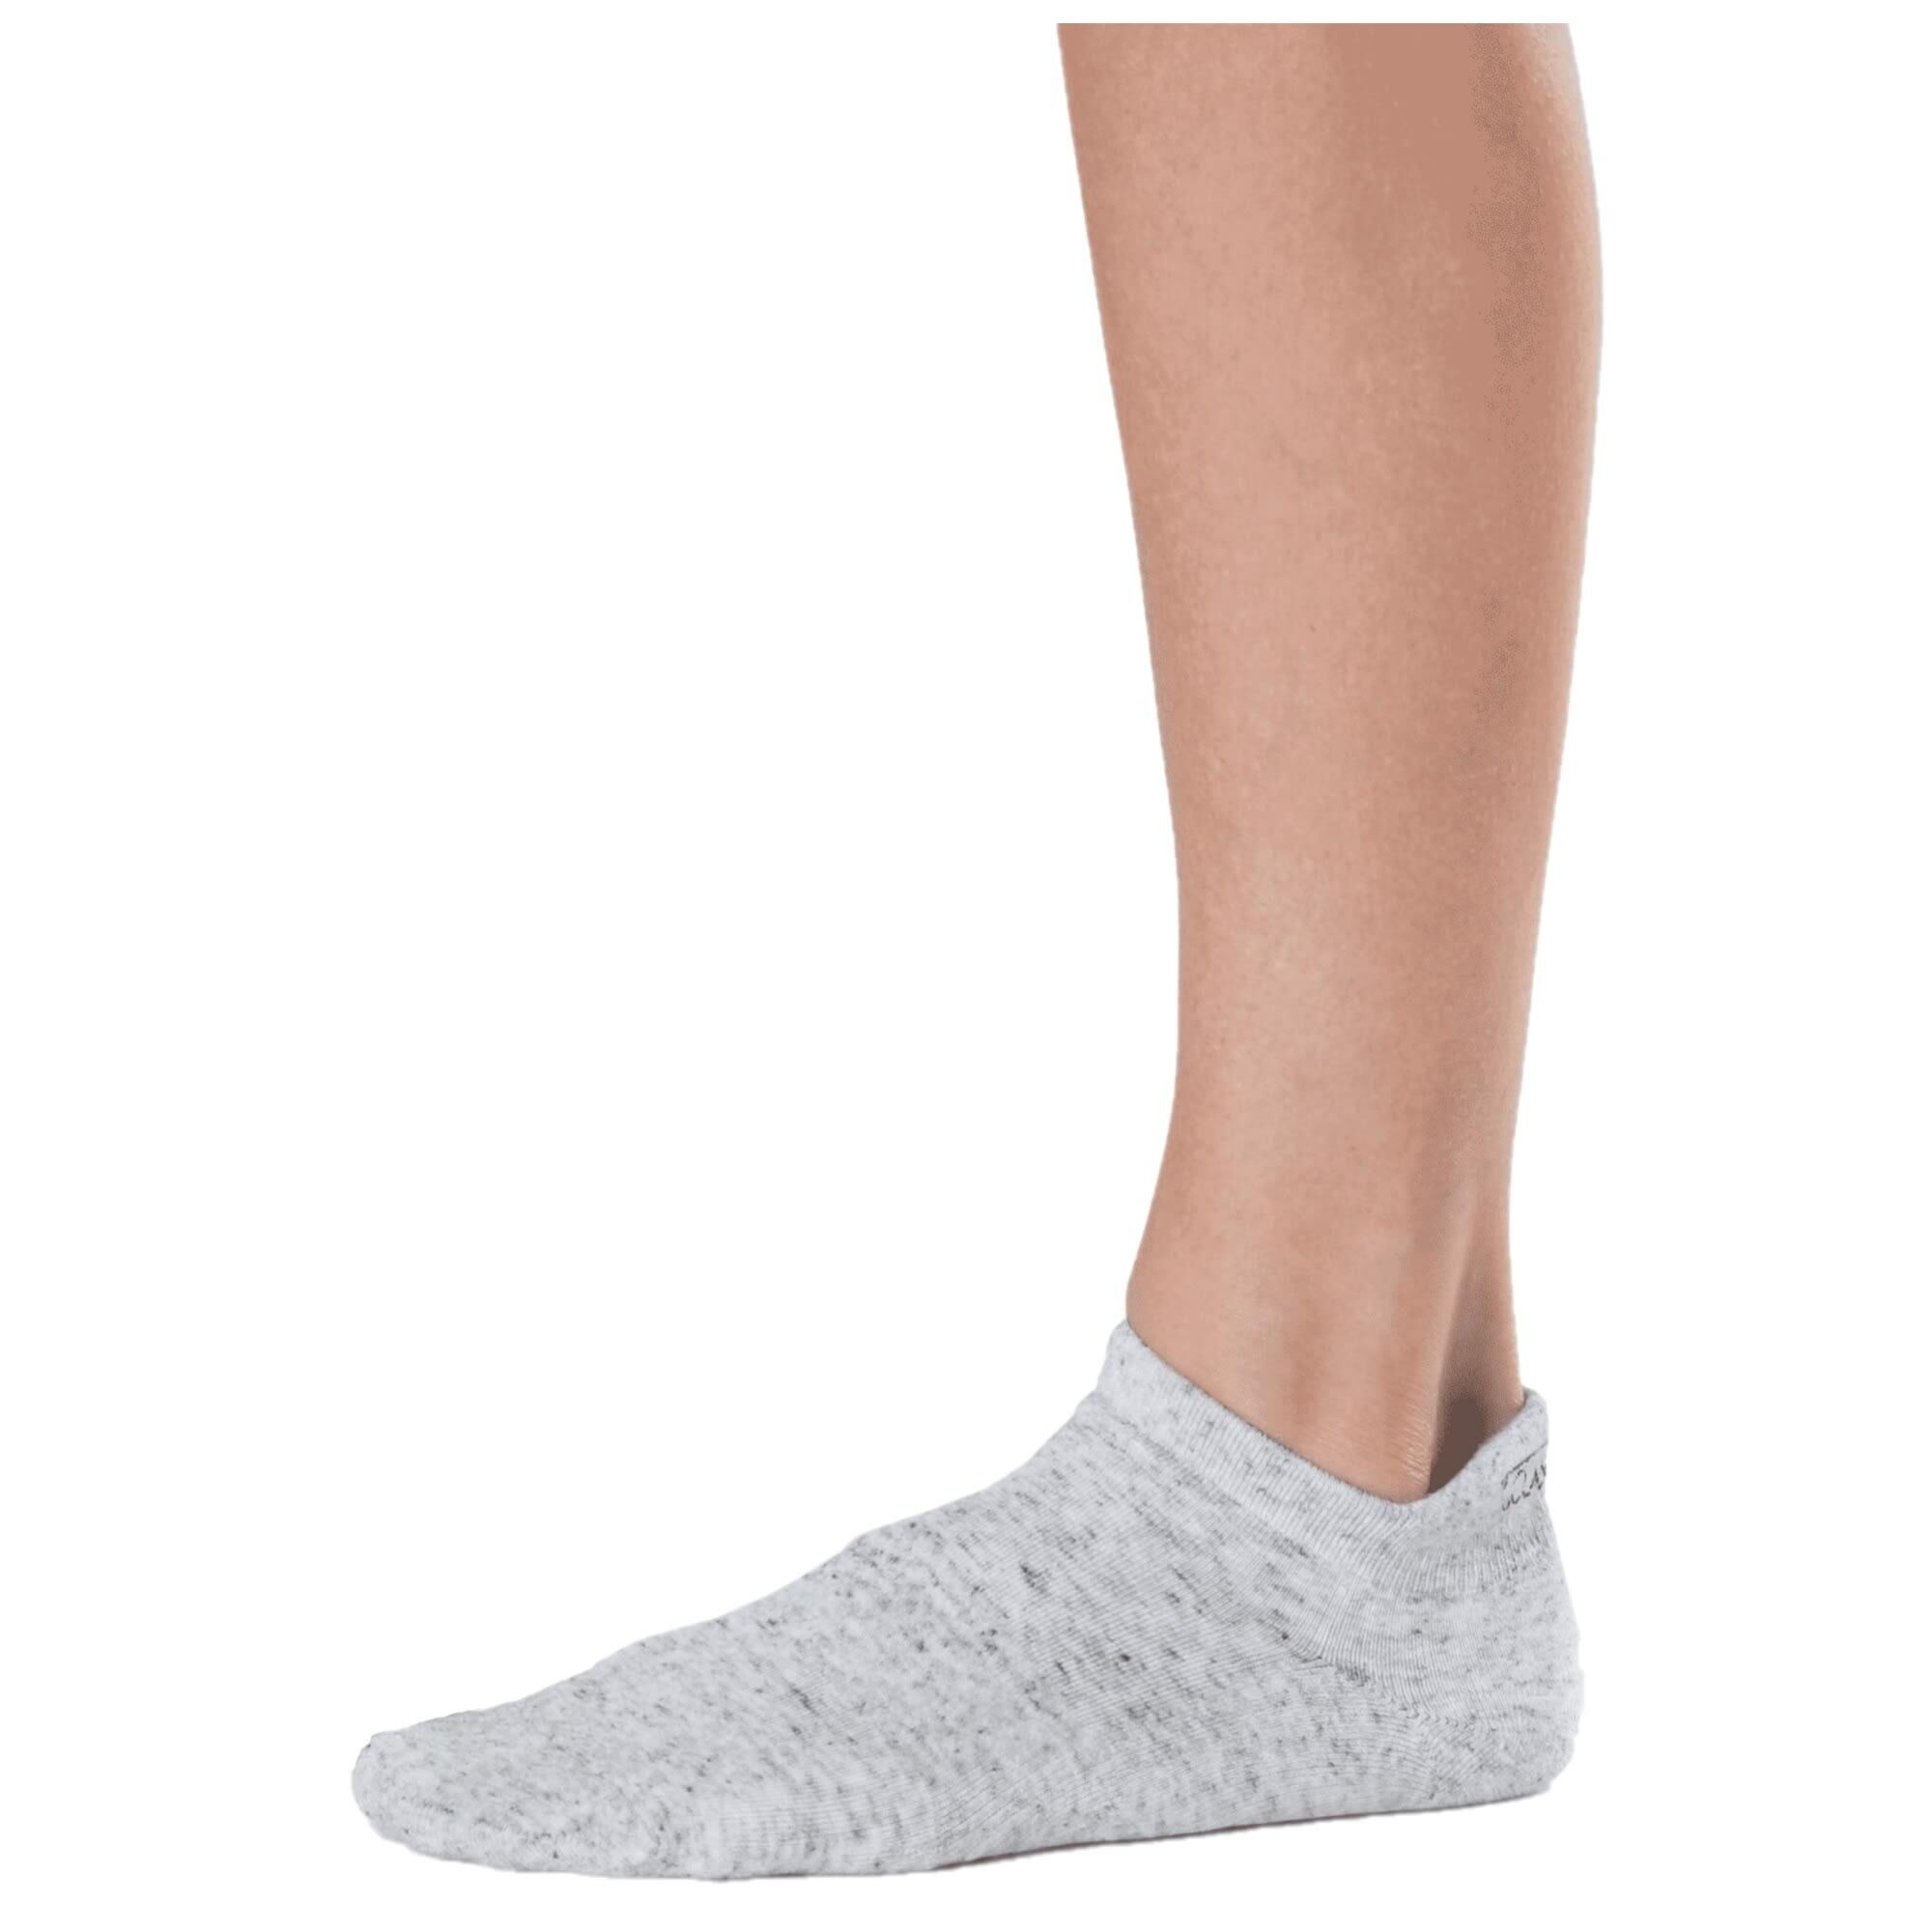 FITNESS-MAD Unisex Adult Savvy Ankle Socks (Grey)